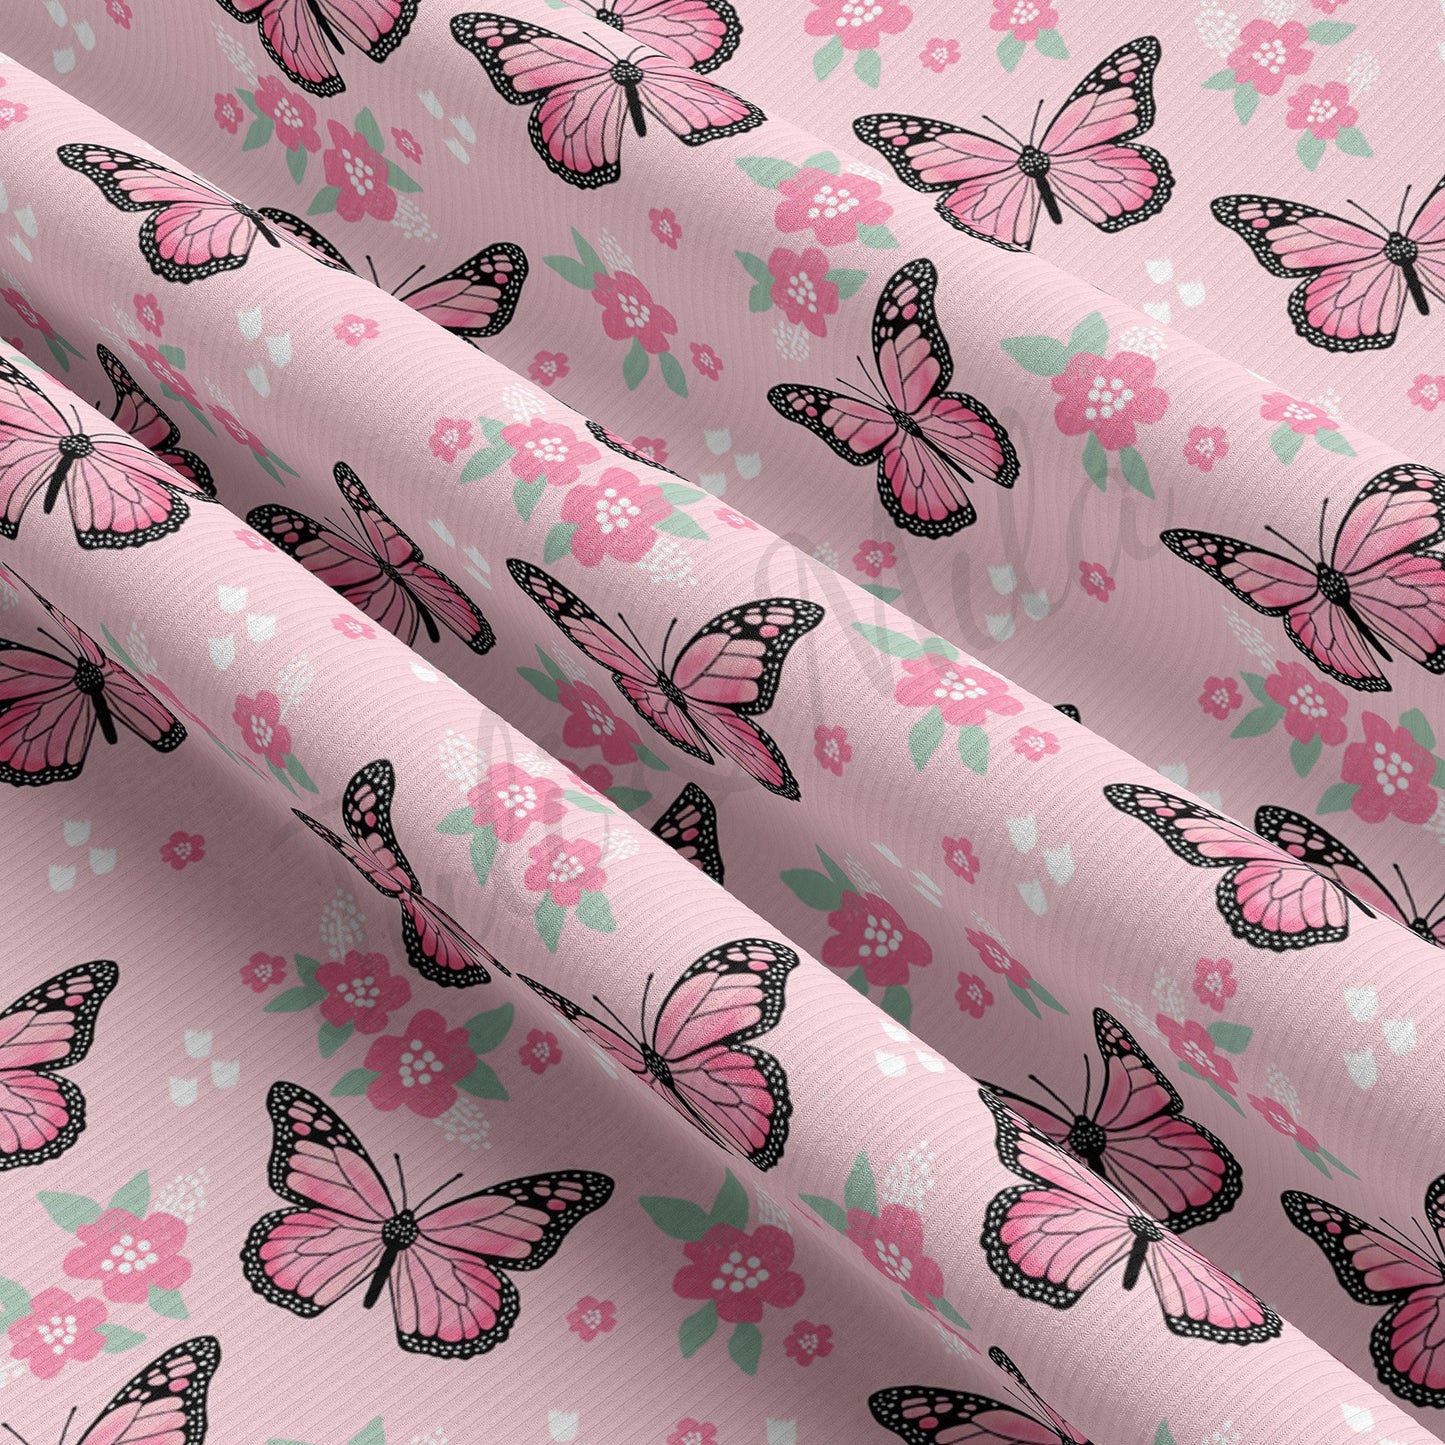 Butterfly Rib Knit Fabric RBK1489